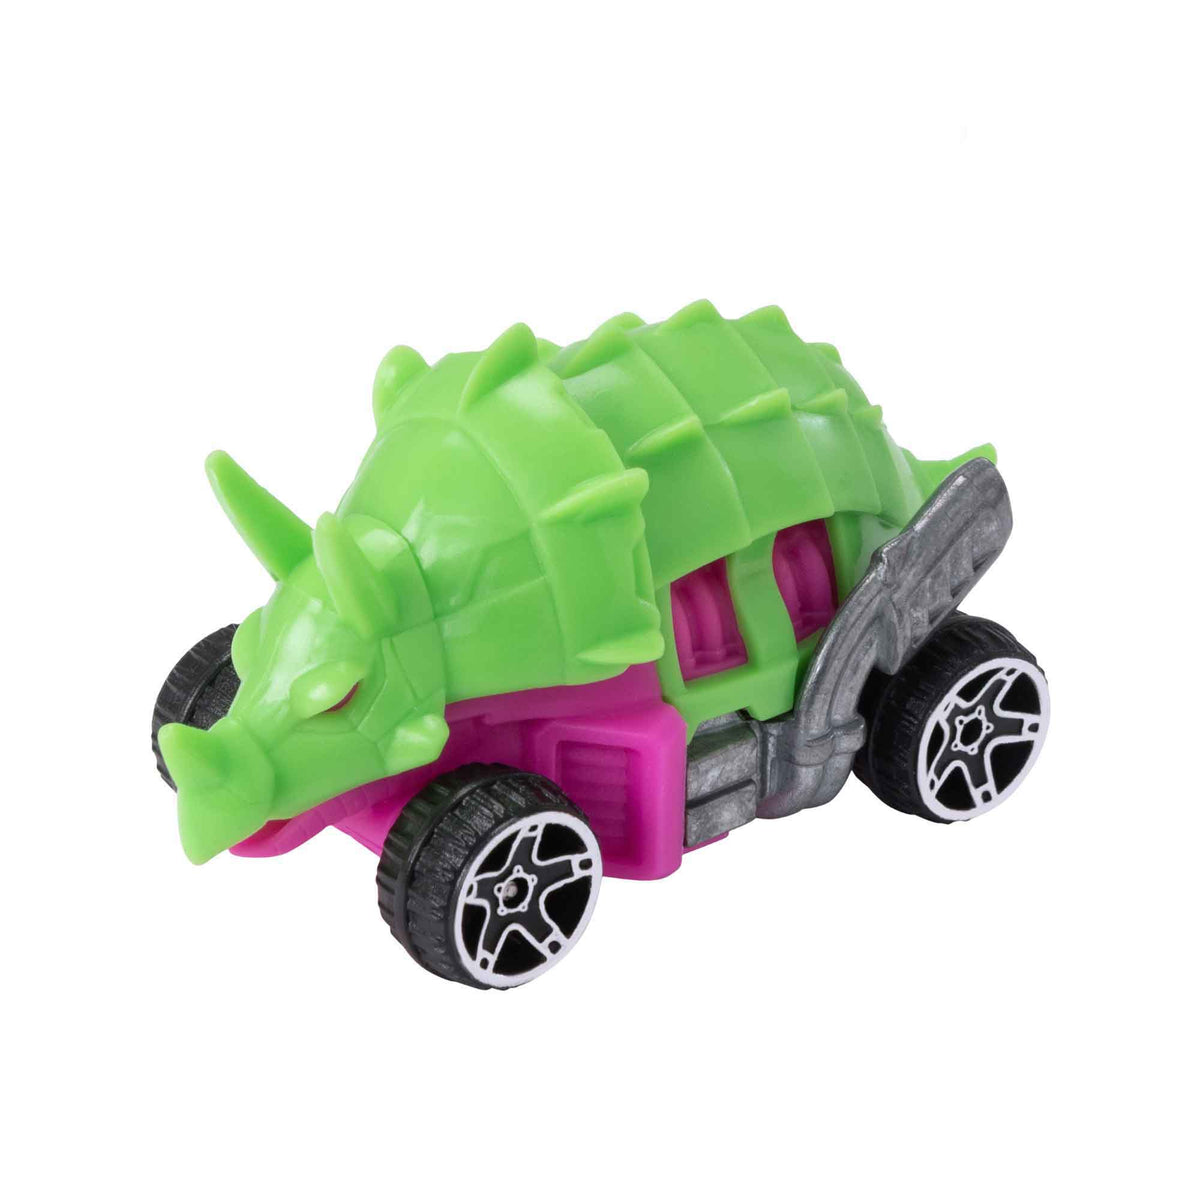 Teamsterz Beast Machine Car Play Set | 6 Die-Cast Beast Cars Included